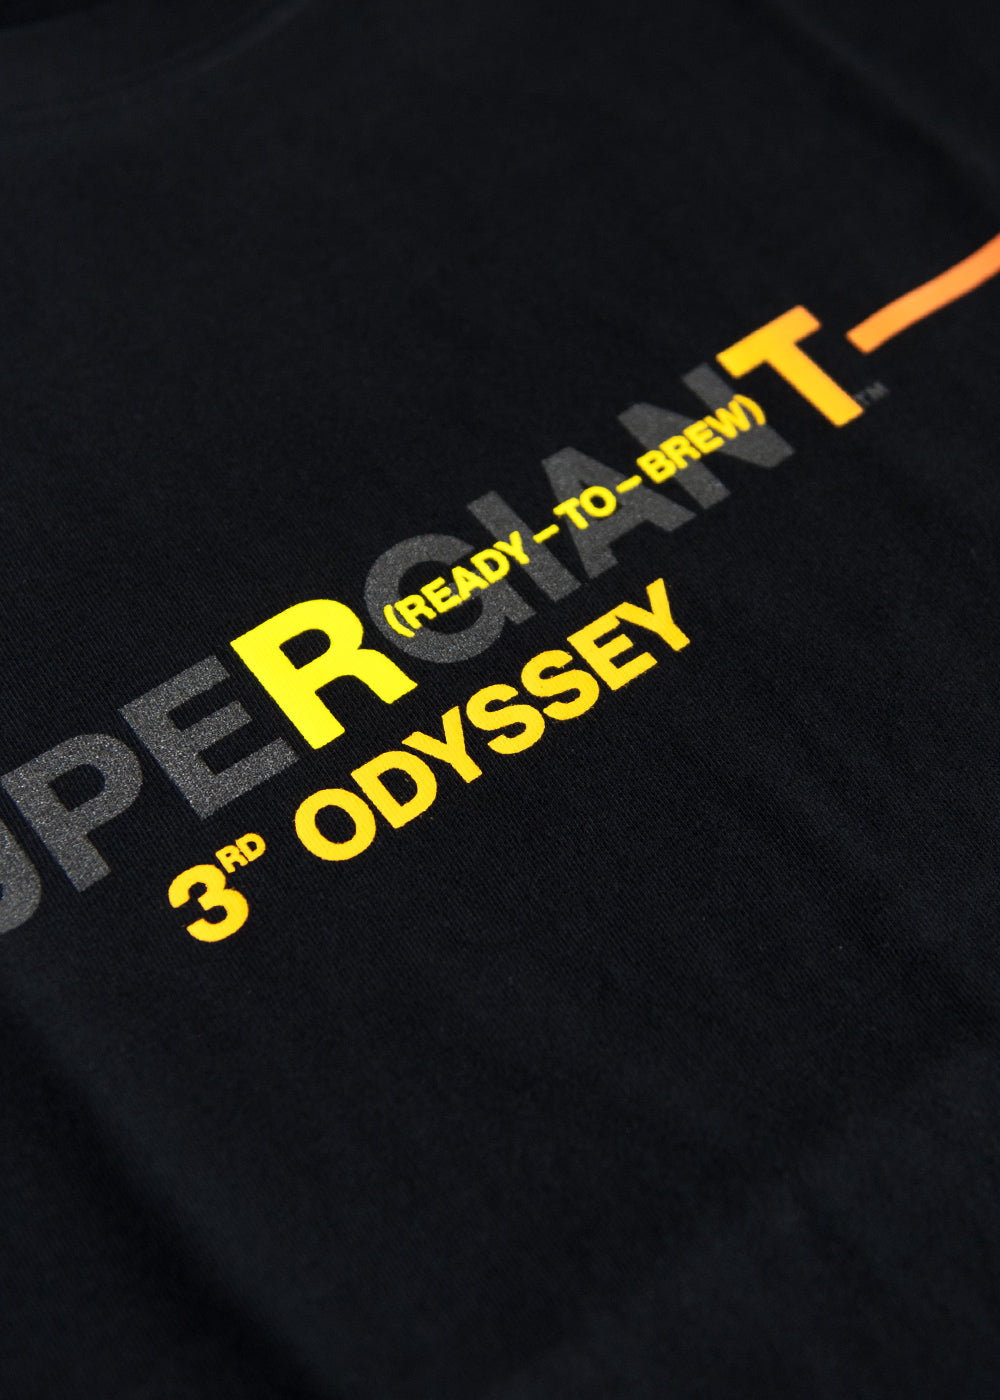 SUPERGIANT™ 3RD ODYSSEY T-SHIRT BLACK